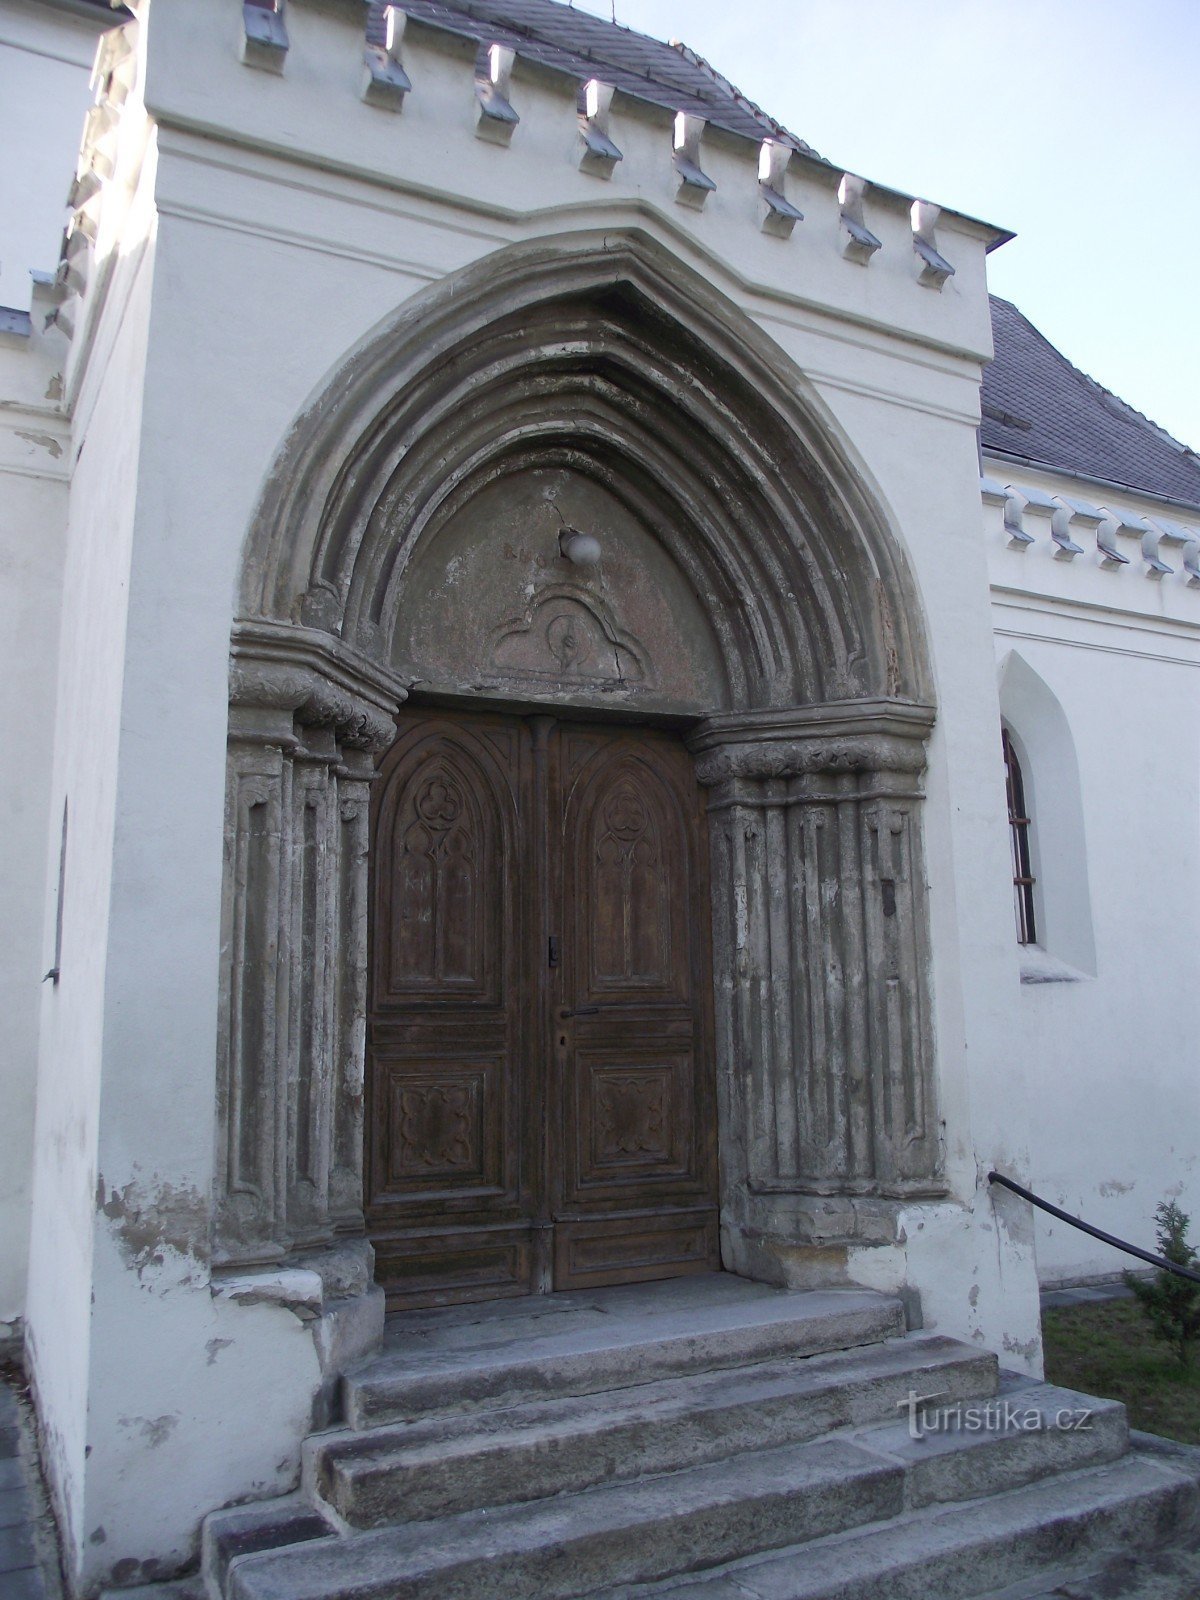 Romansko-gotski portal